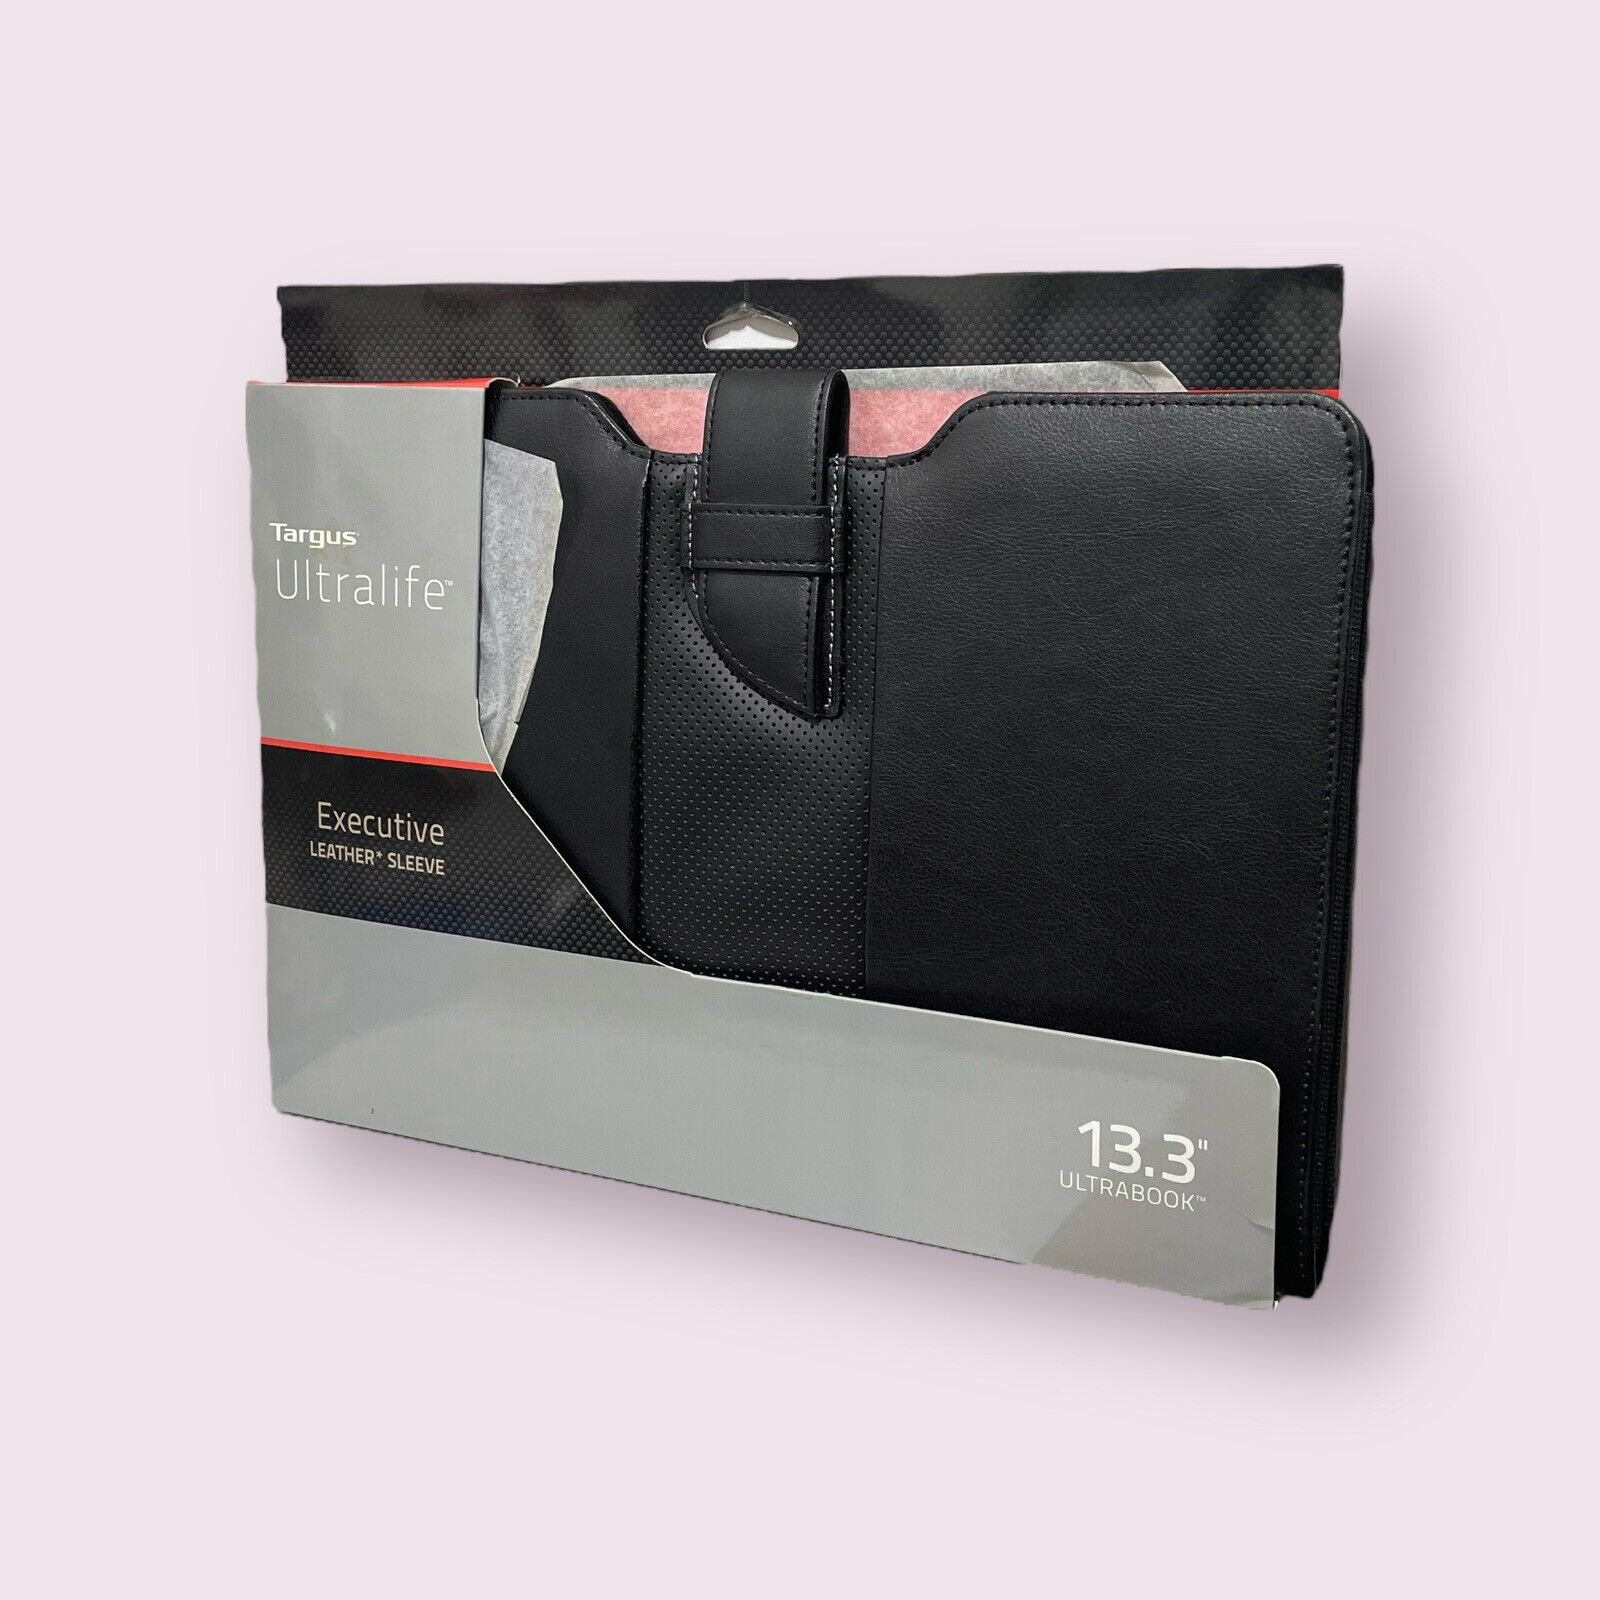 Brand new Targus Ultralife Executive Leather 13.3” Ultrabook Sleeve